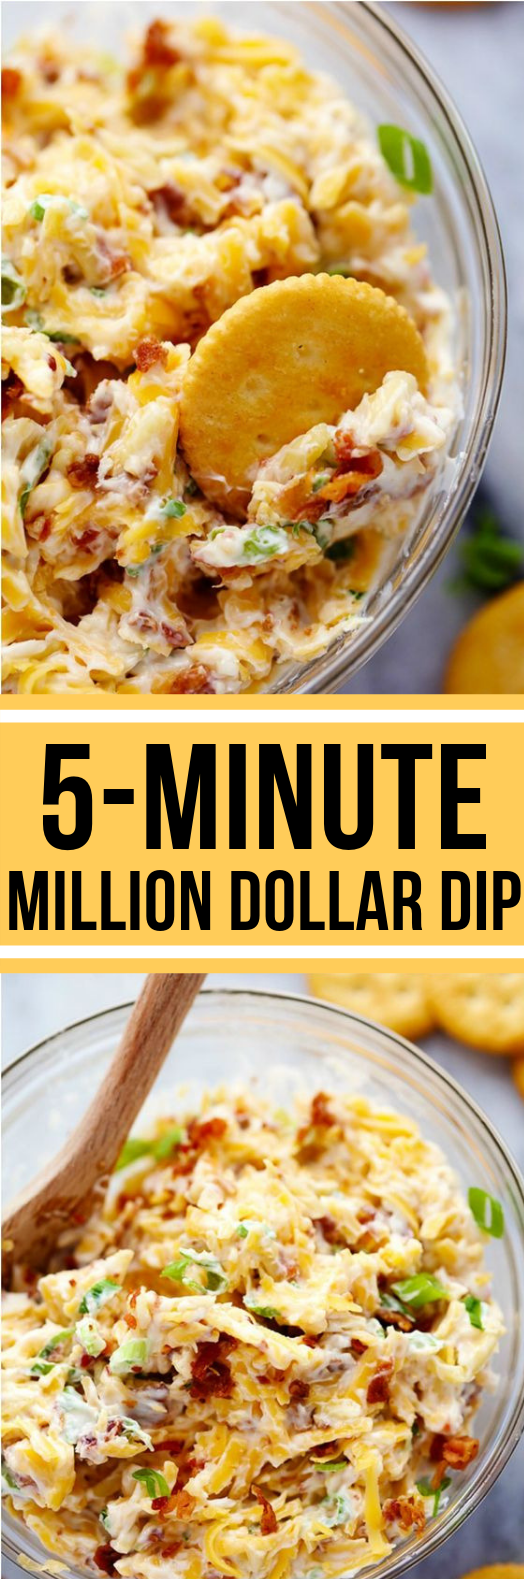 5 MINUTE MILLION DOLLAR DIP #Meal #glutenfree